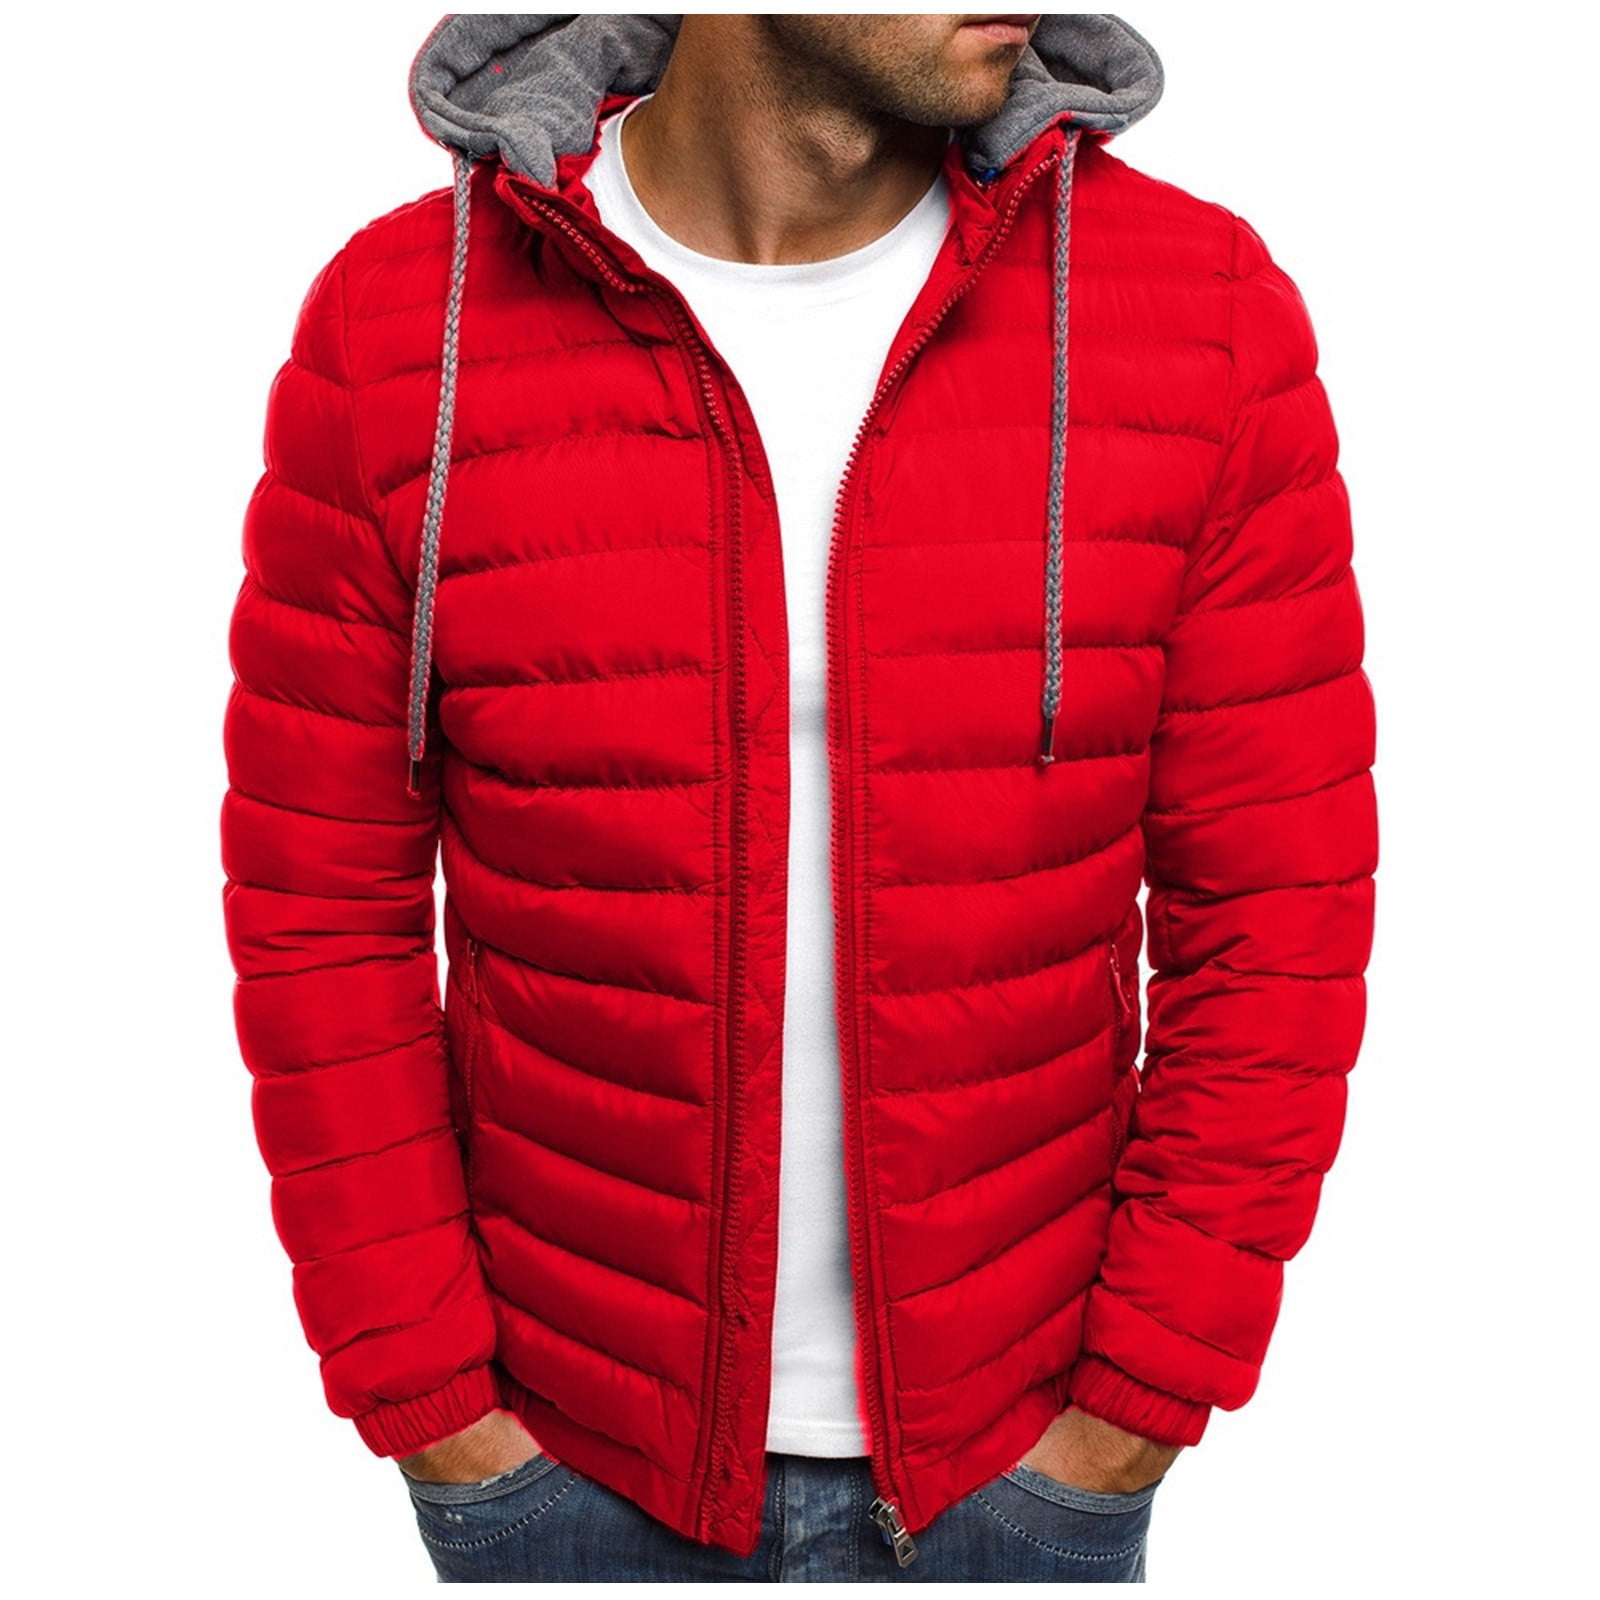 JSGEK Clearance Men's Fashion Autumn Winter Cotton Jacket Tierred Zipper  Lightweight Warm Hoodie Down Jacket Thicken Top Coat with Drawstring Red XXL